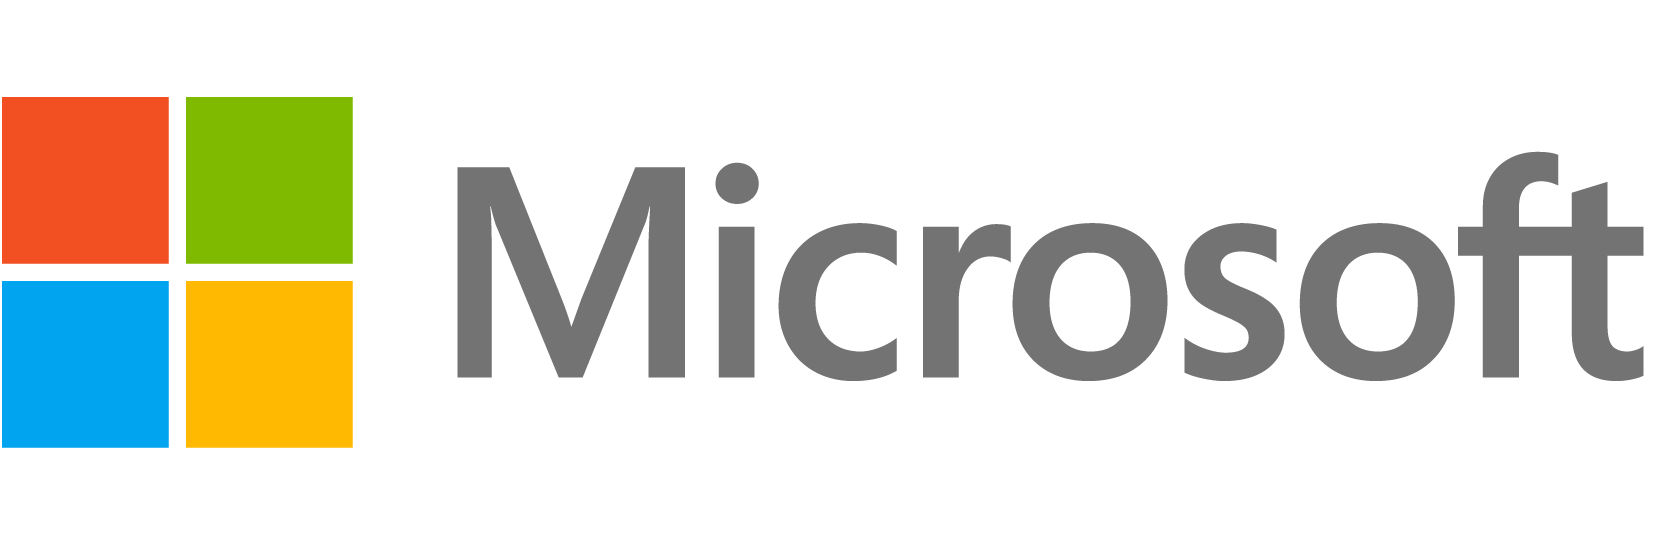 microsoft logo 2